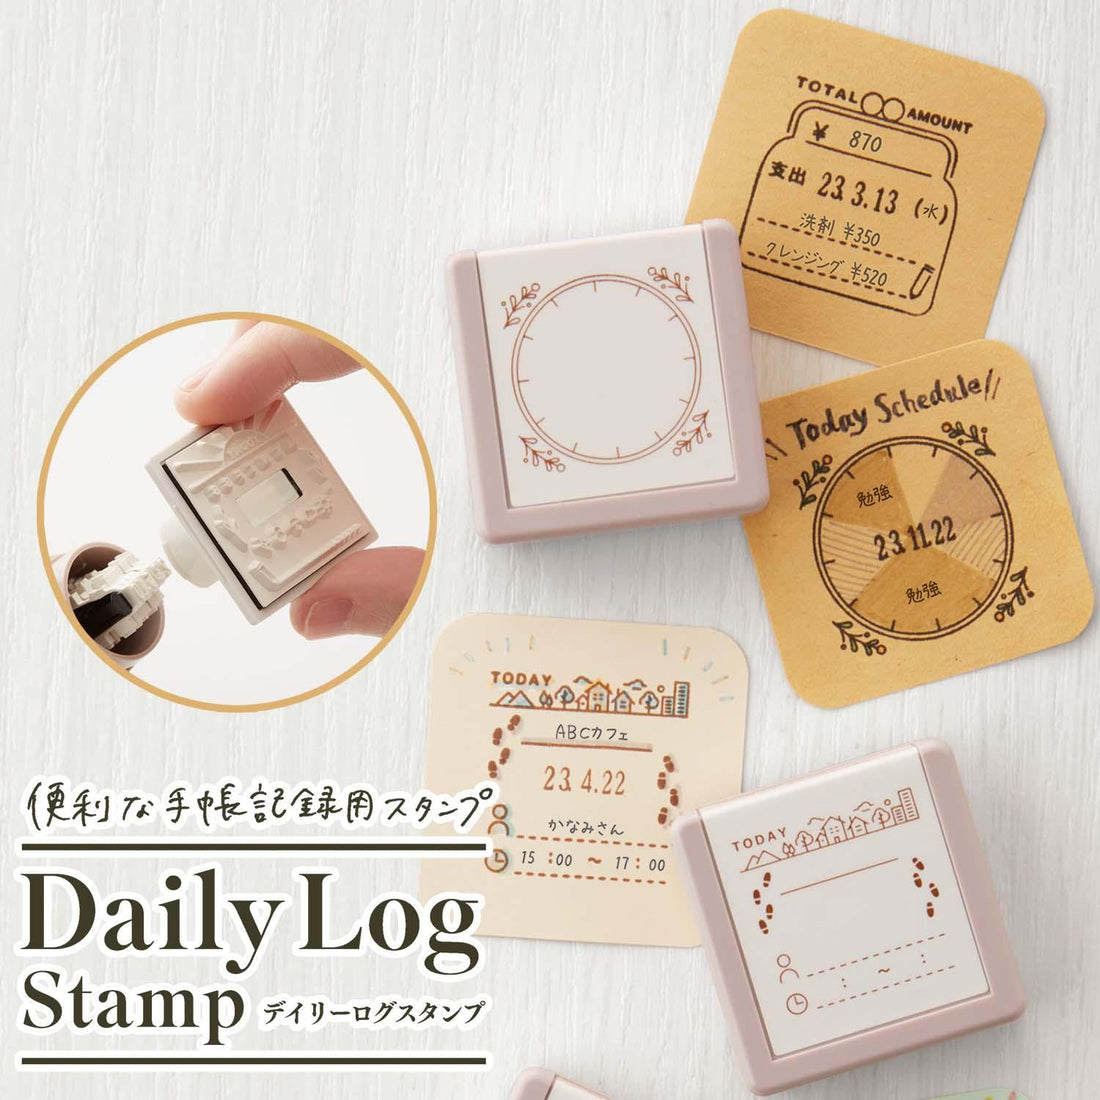 Daily Log Stamp - Sleep Record - Techo Treats